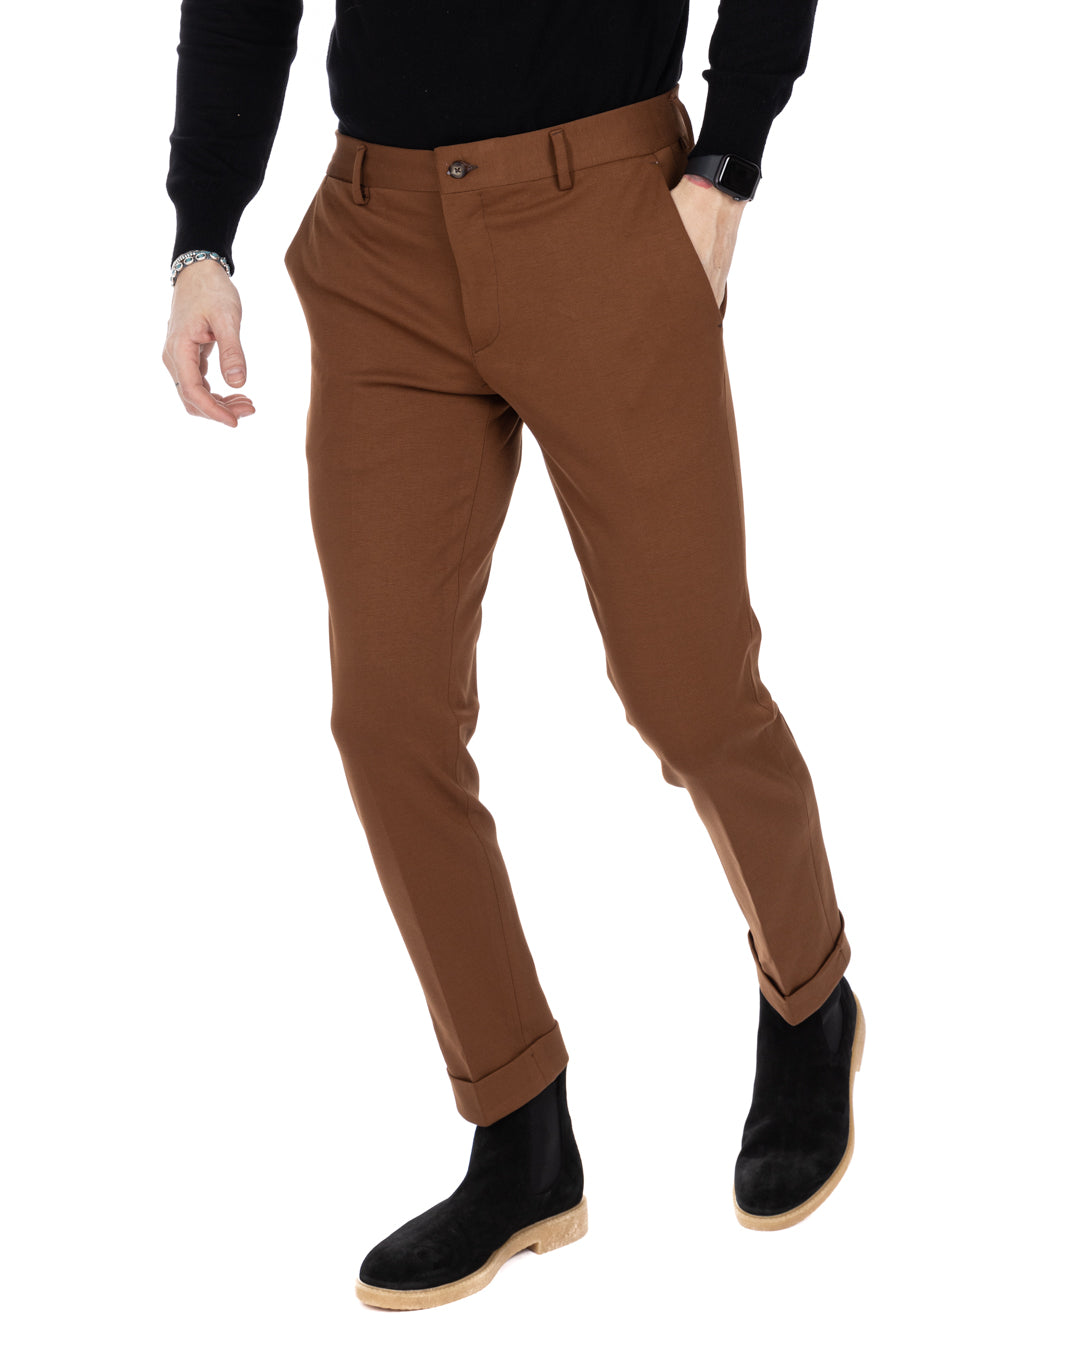 Altamura - pantalon marron classique